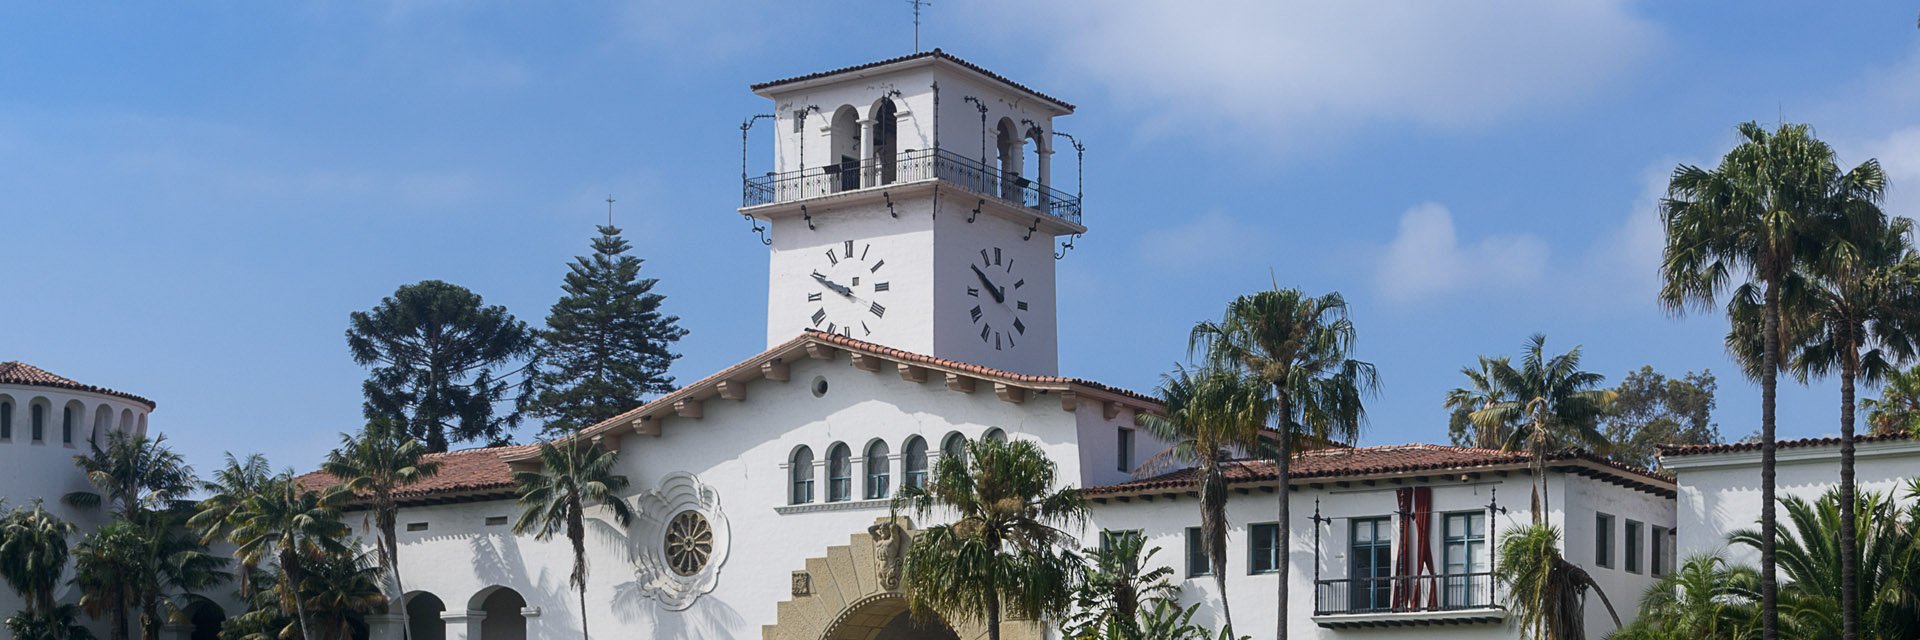 The Santa Barbara County Courthouse